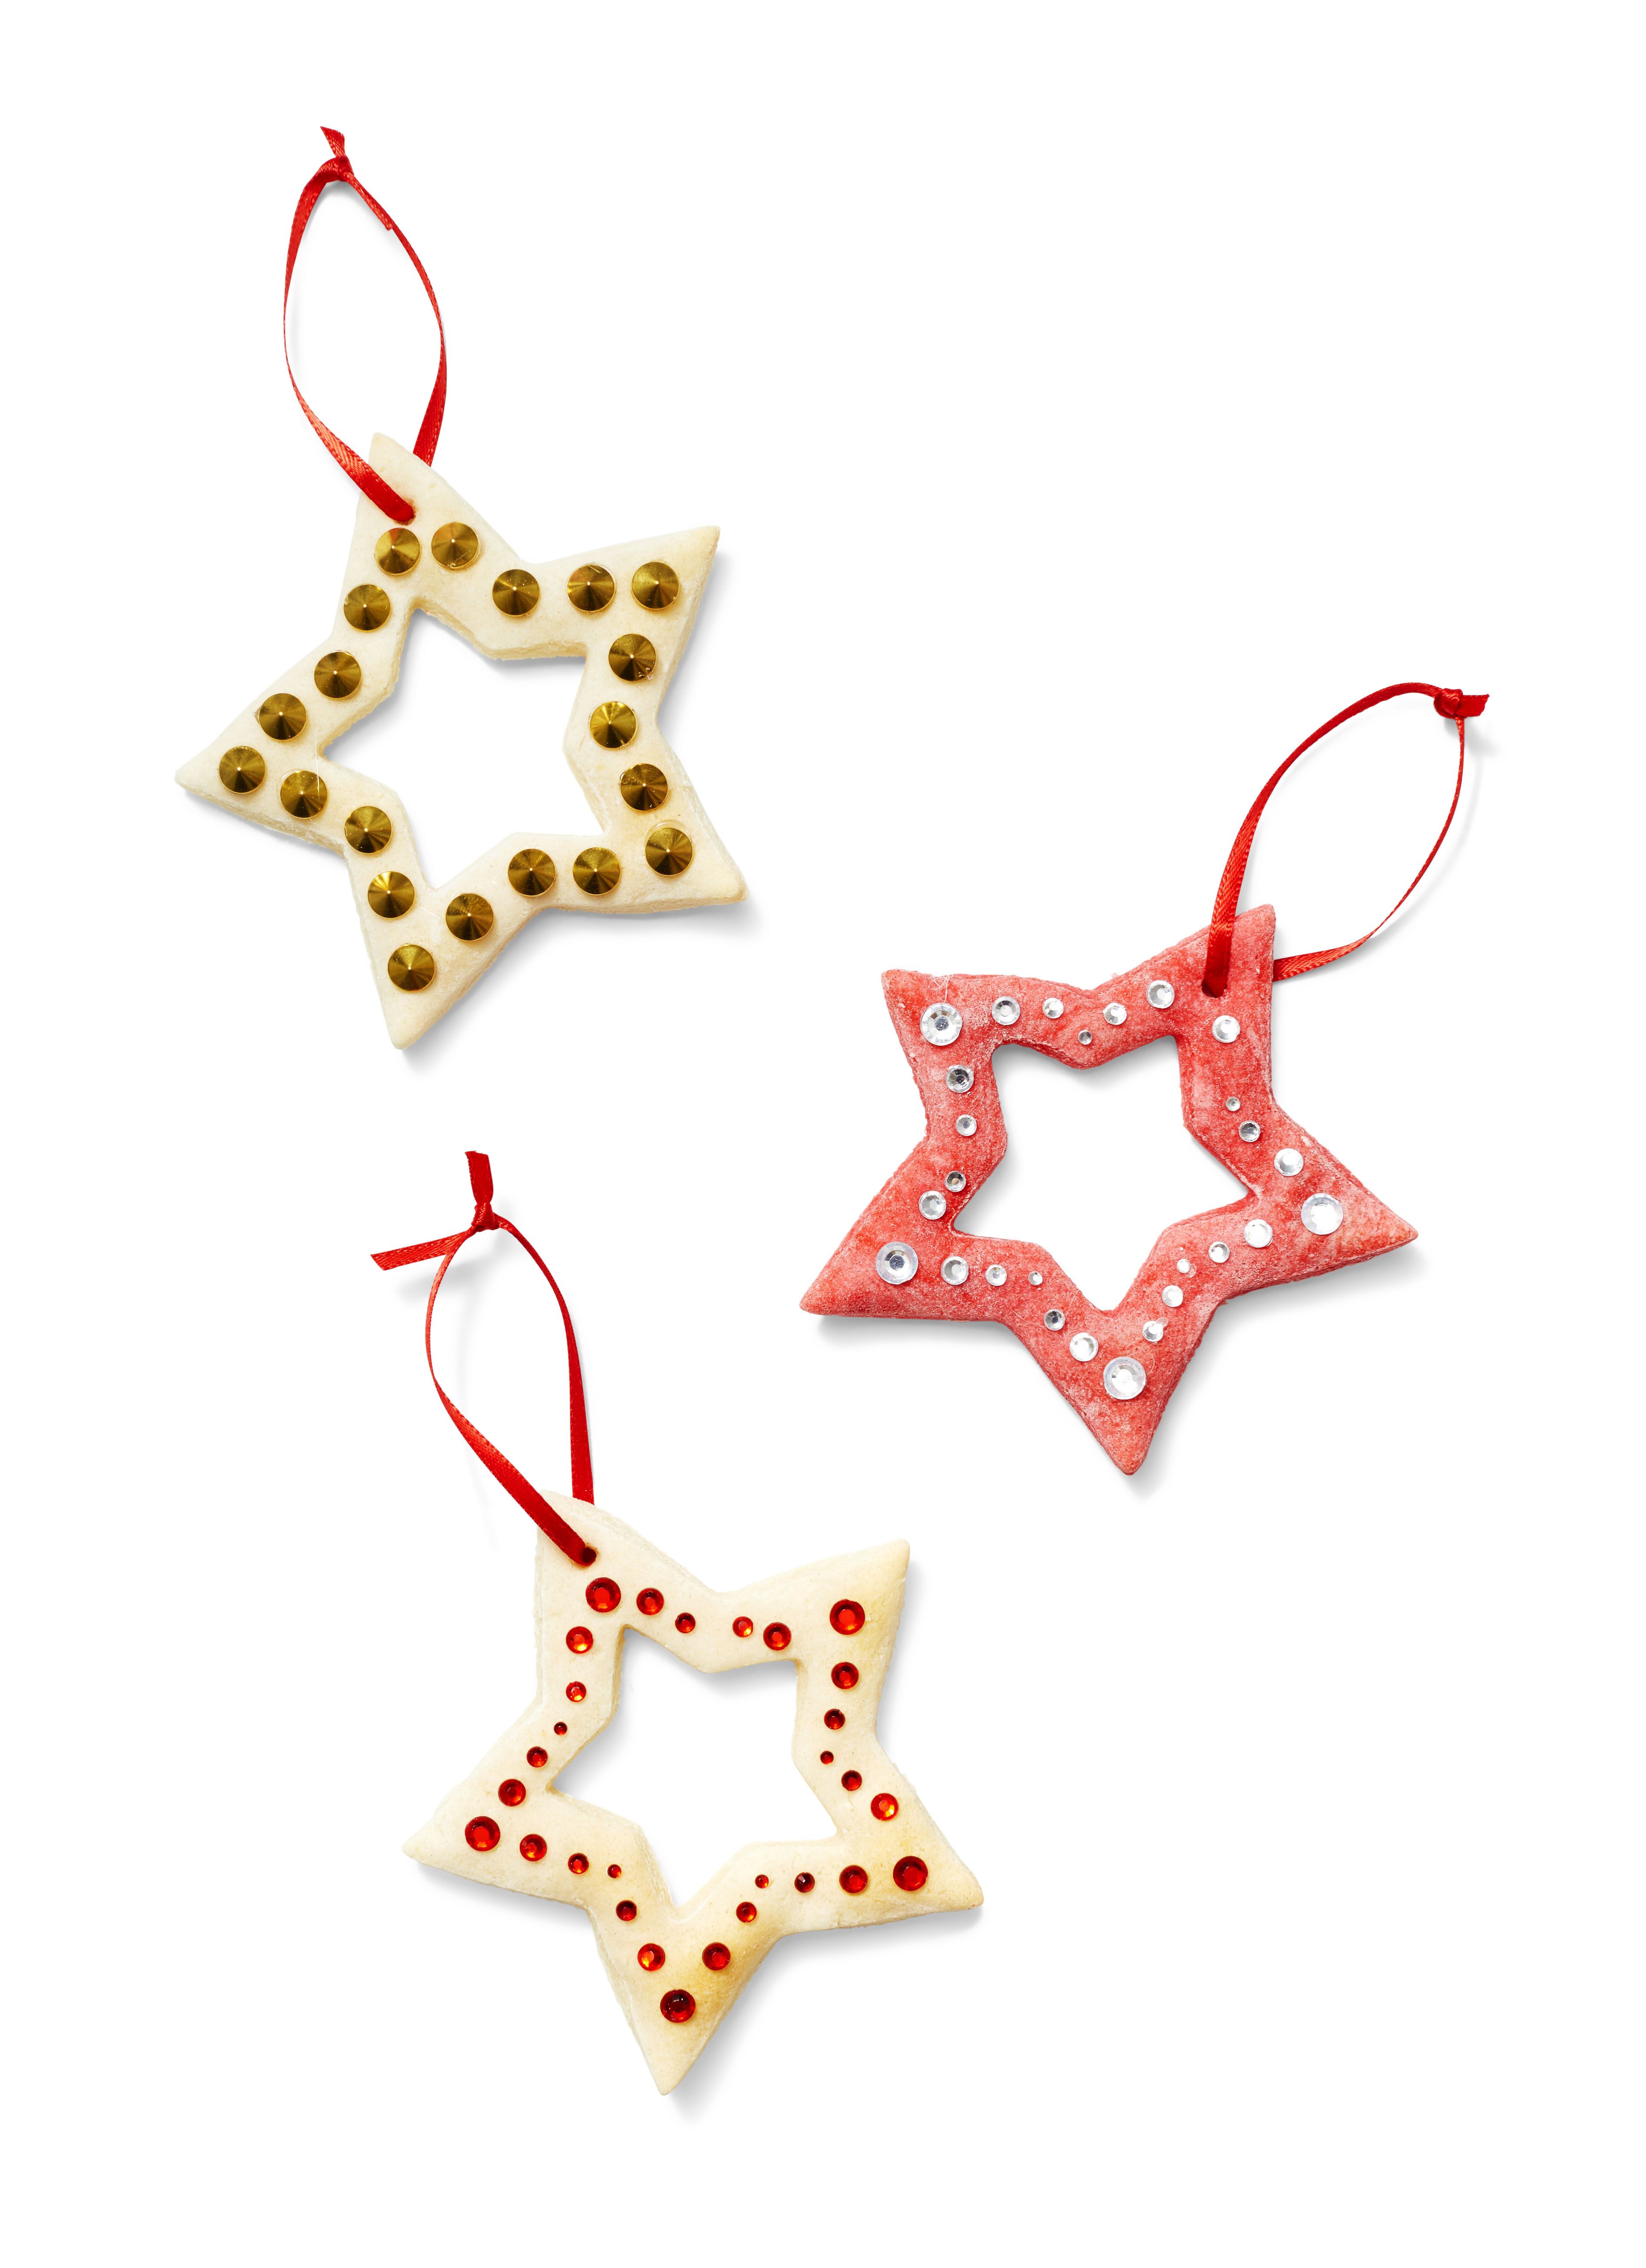 Details about  / NIB Creative Hands Foam stars and bulbs Christmas glitter ornaments Kit